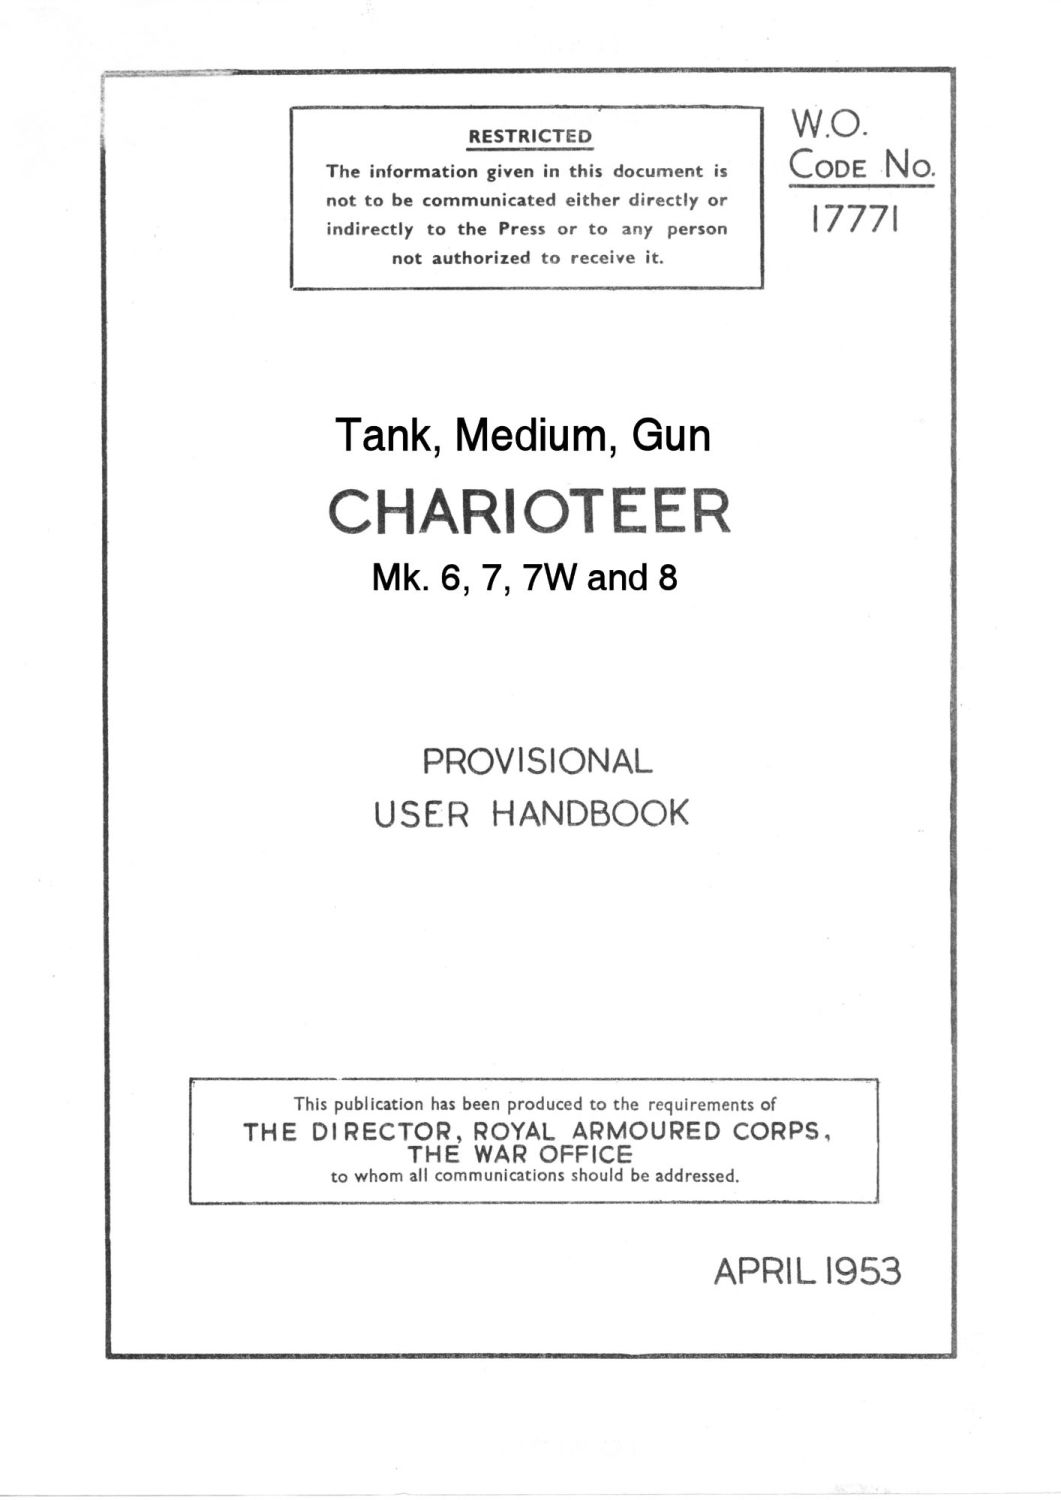 Charioteer Mk. 6,7,7W Provisional User Handbook